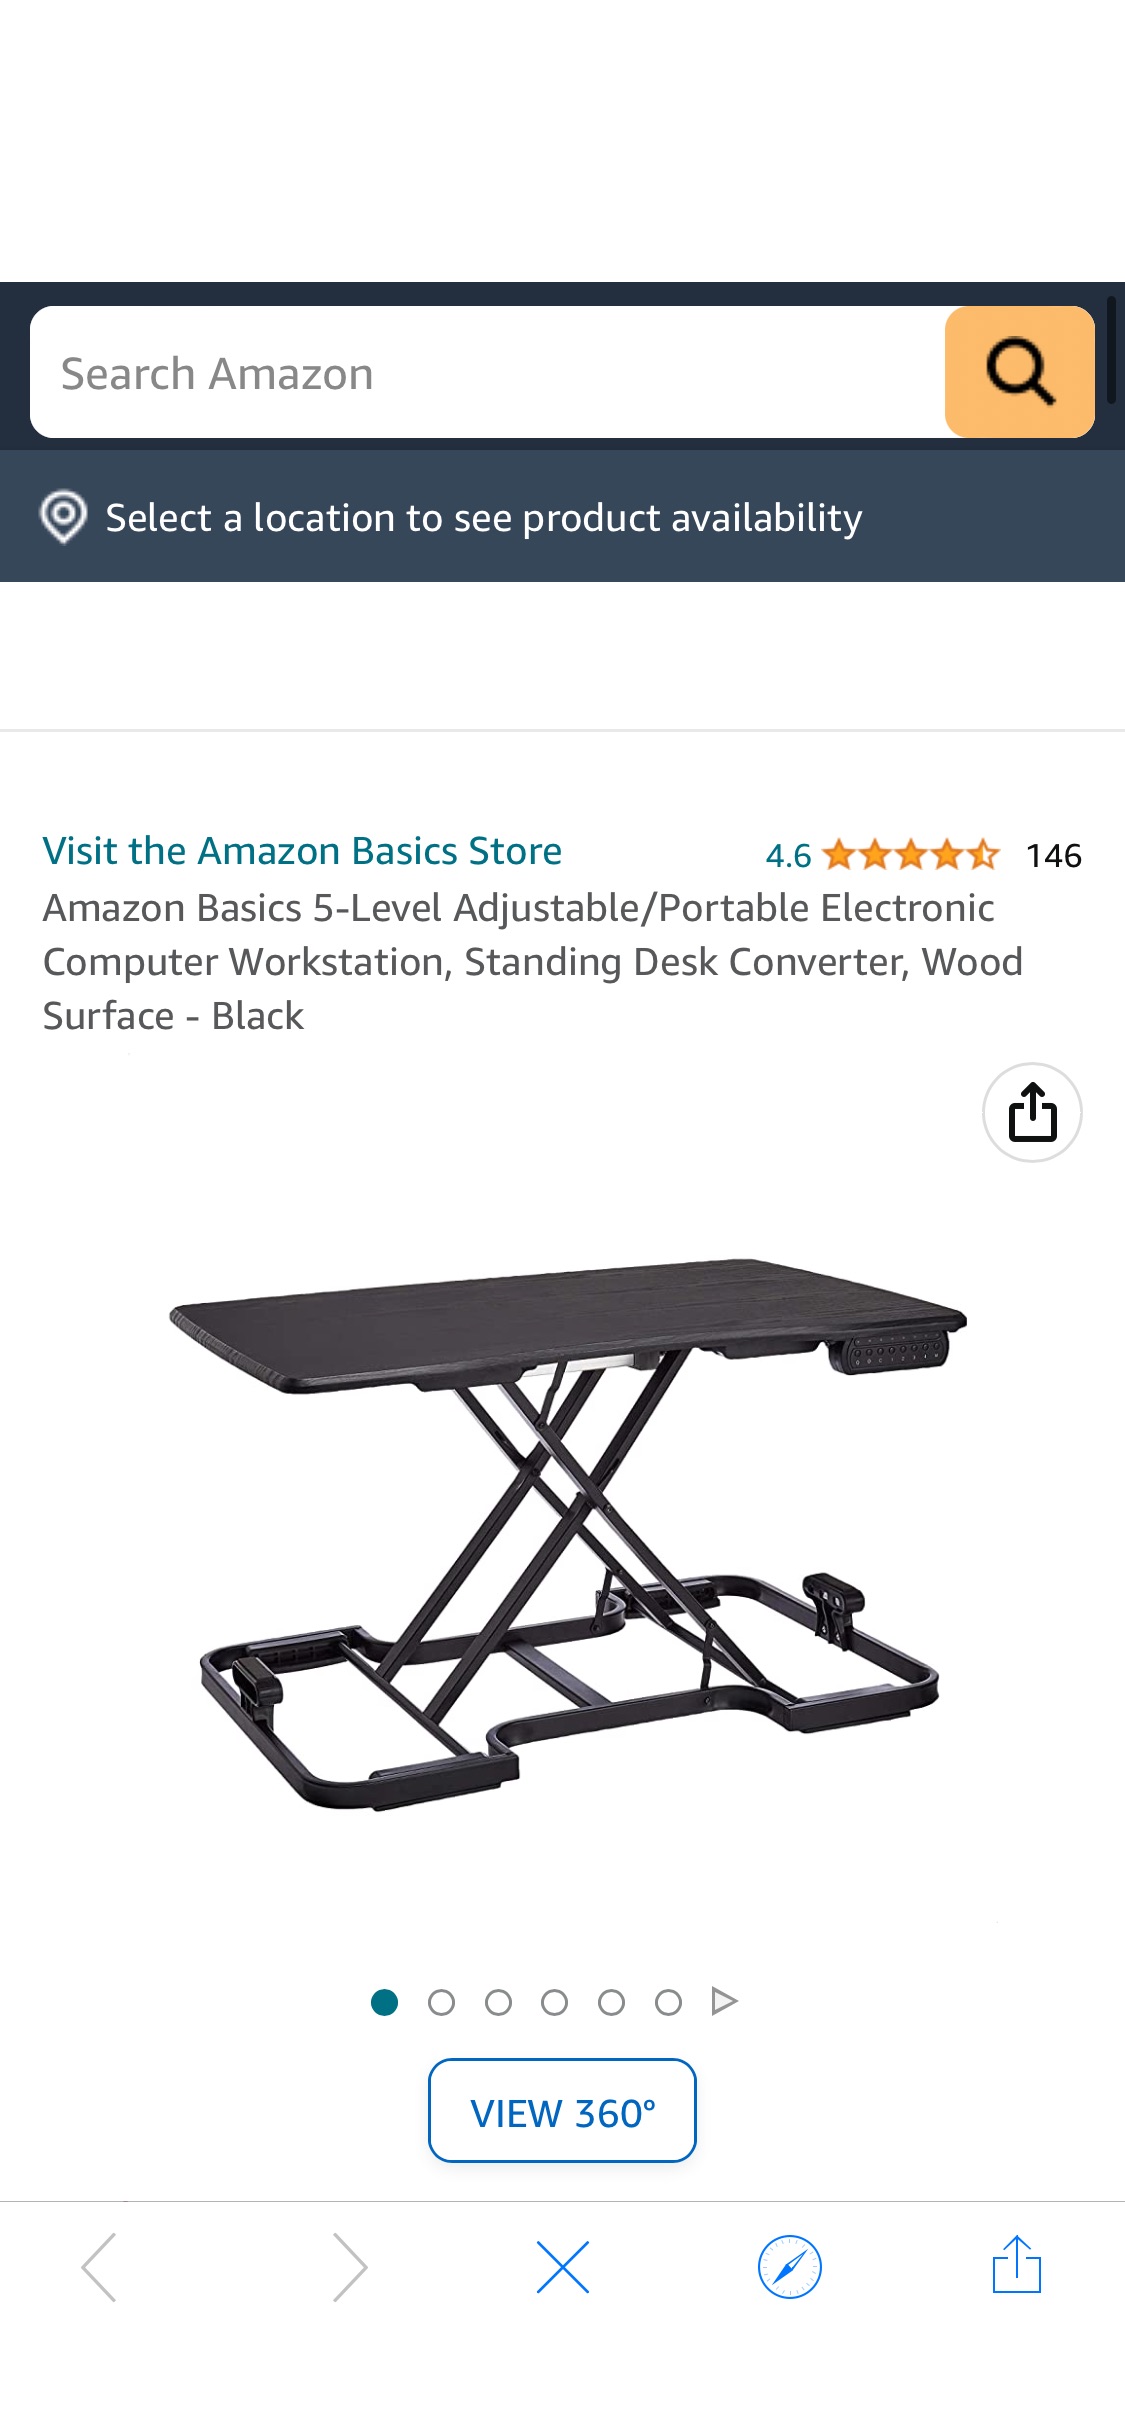 Amazon.com: Amazon Basics 5-Level Adjustable/Portable Electronic Computer Workstation, Standing Desk Converter, Wood Surface - Black : Home & Kitchen